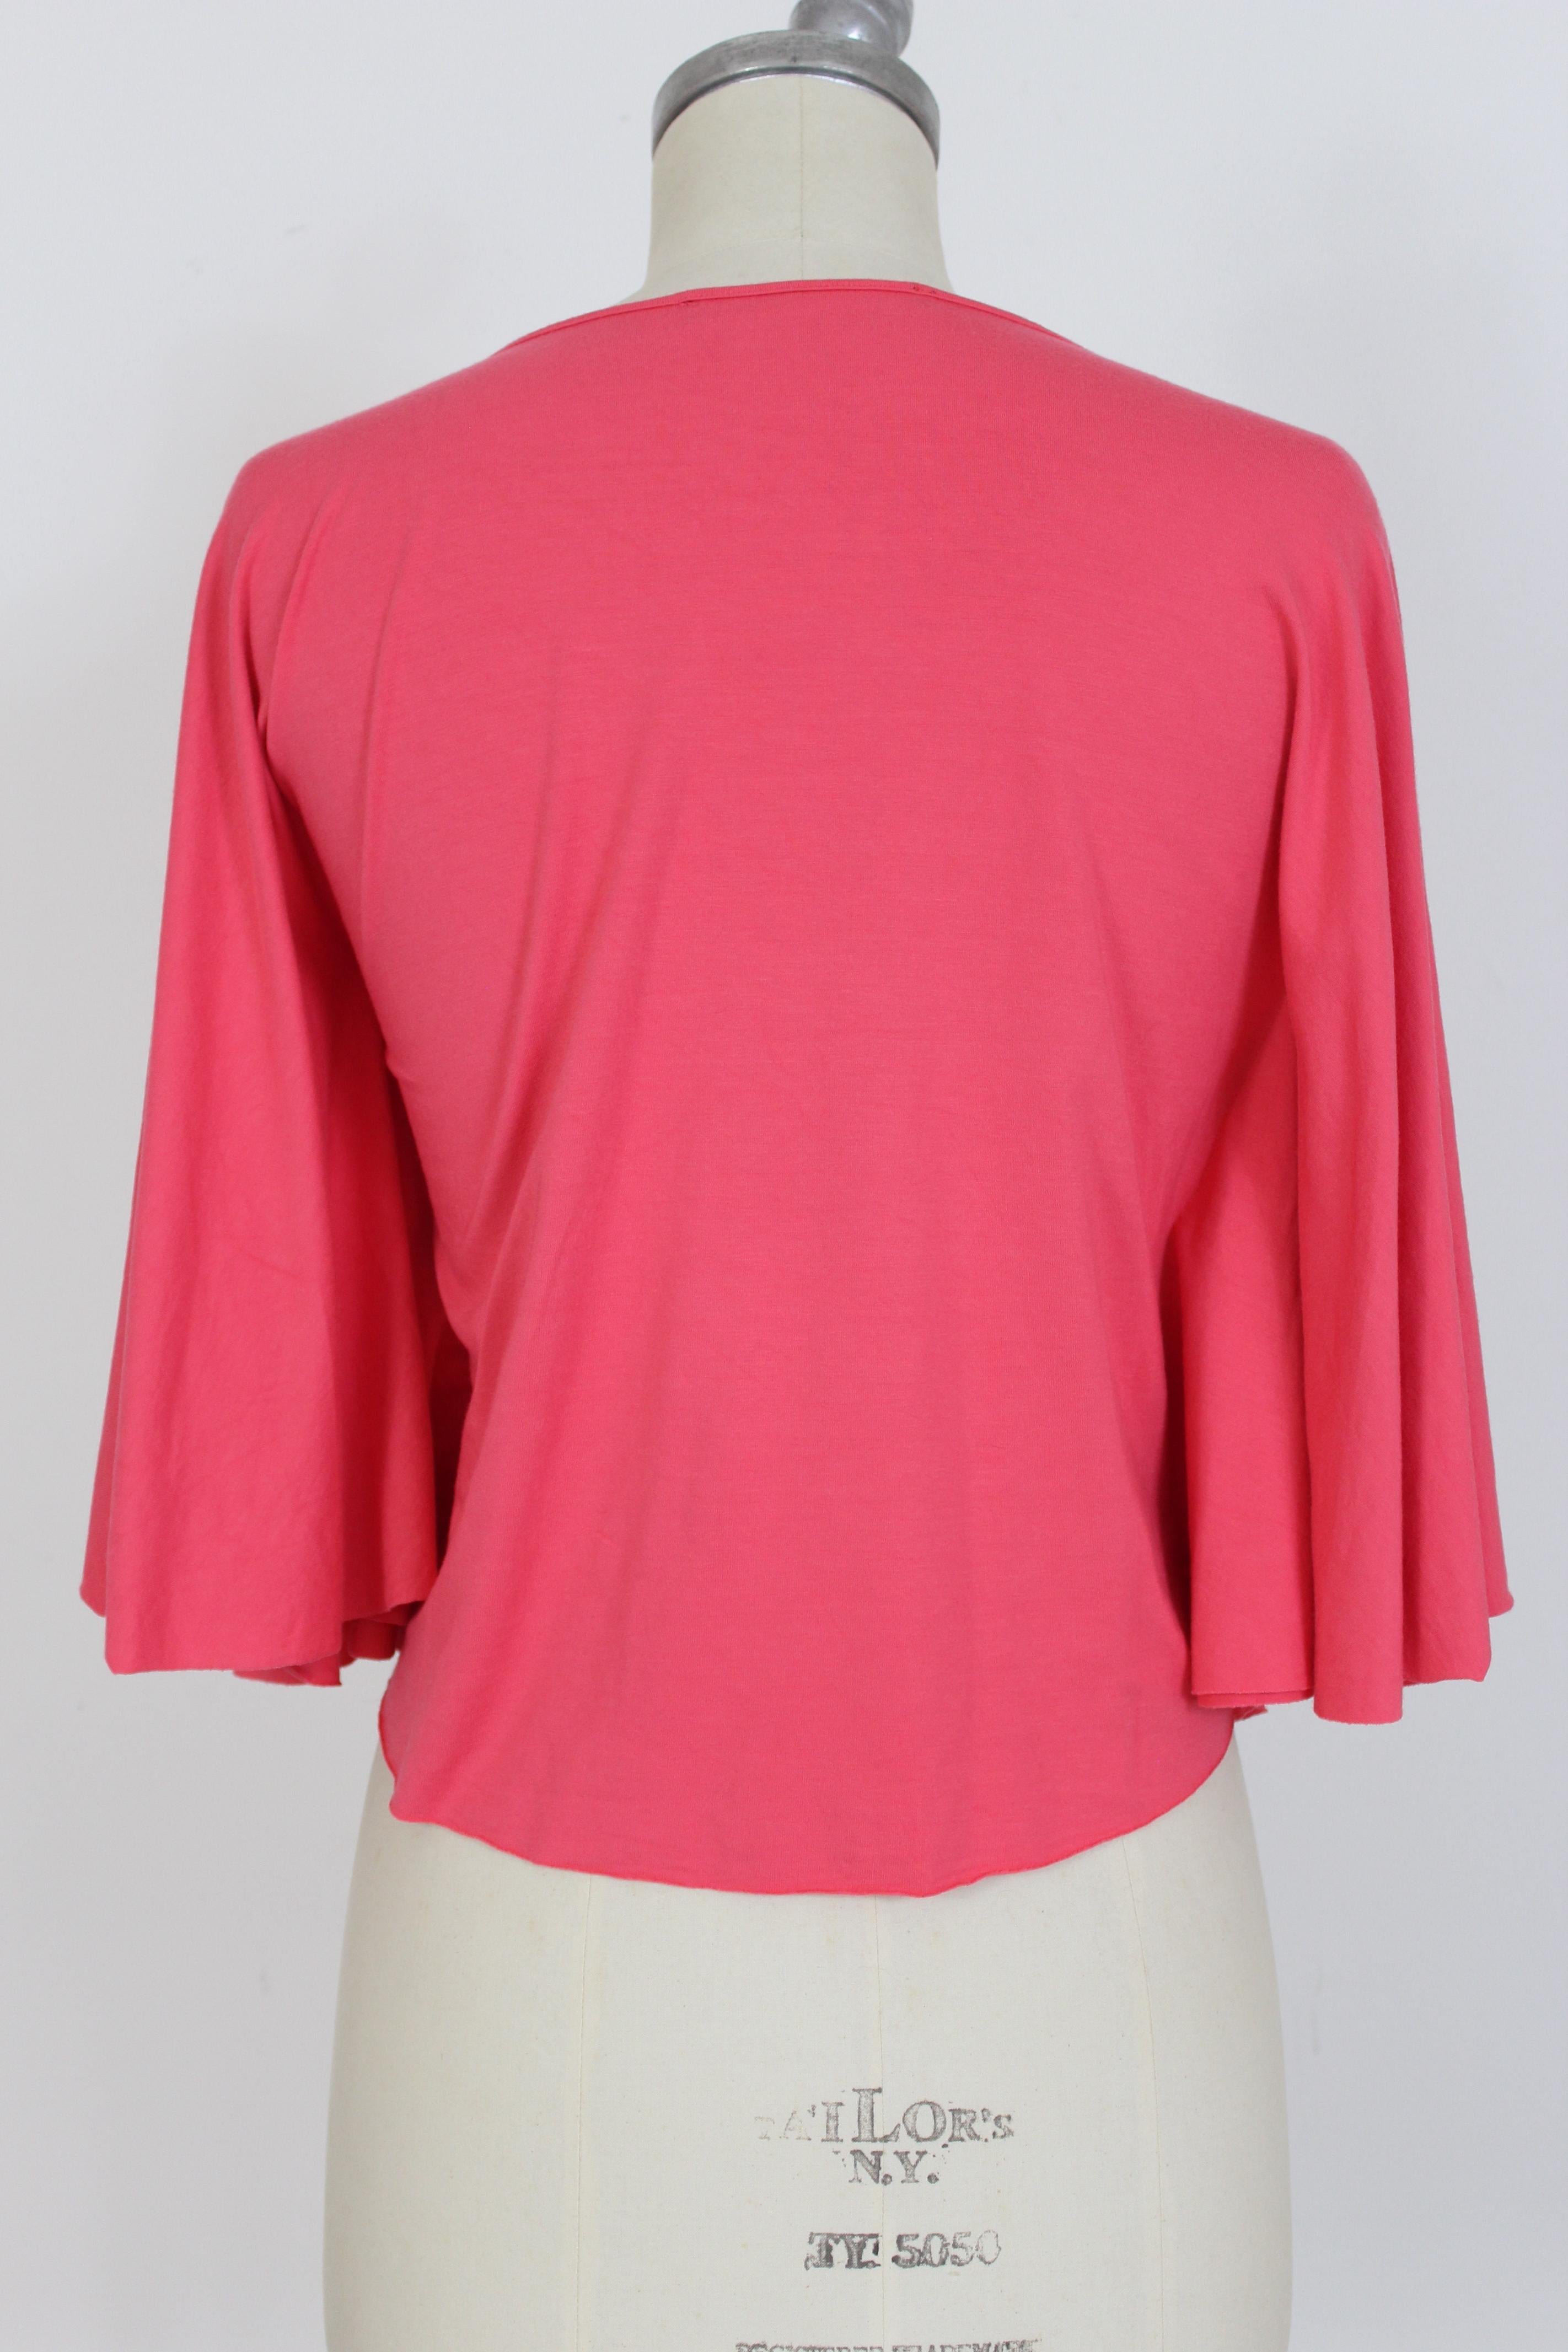 Emanuel Ungaro Pink Black Short Casual Shirt In Excellent Condition In Brindisi, Bt